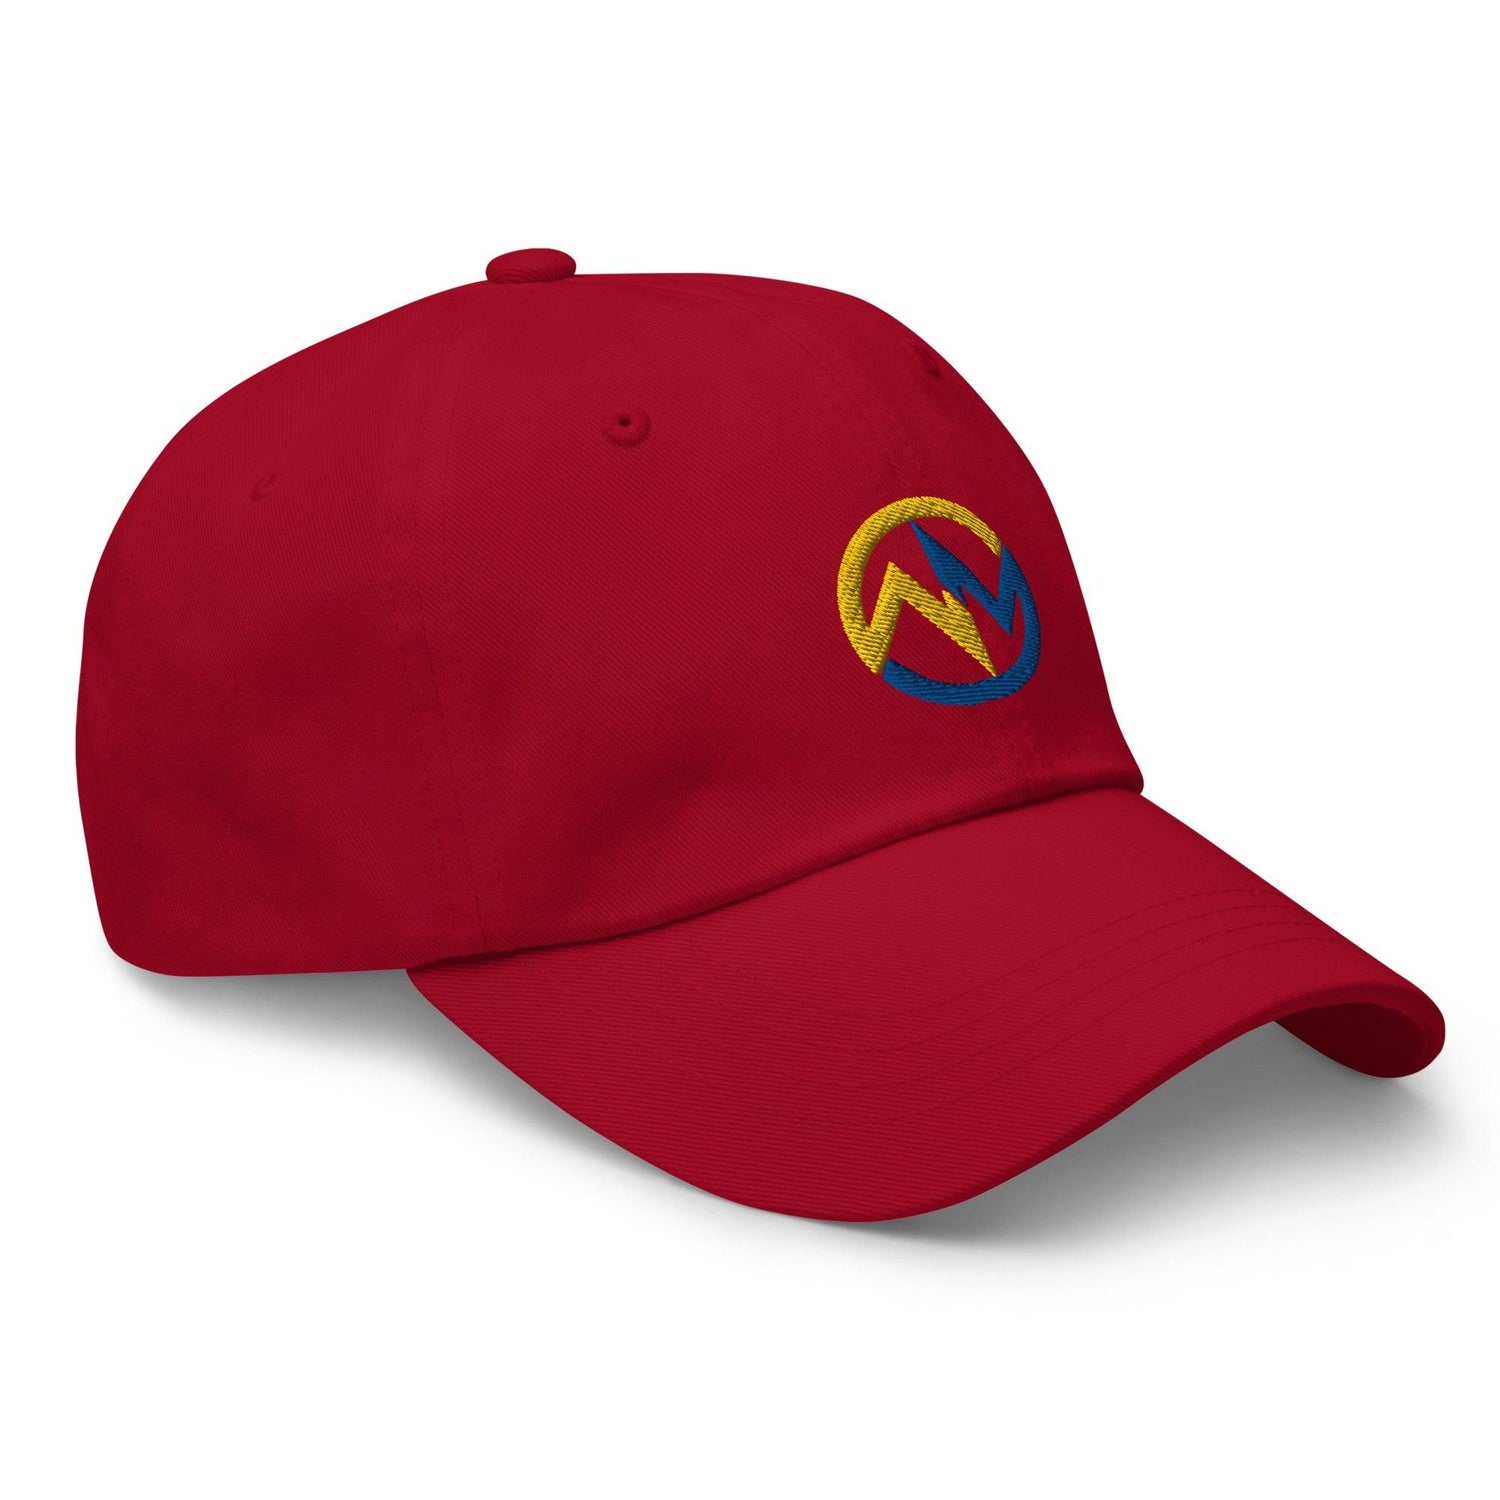 Wesley McCormick "Essential" hat - Fan Arch